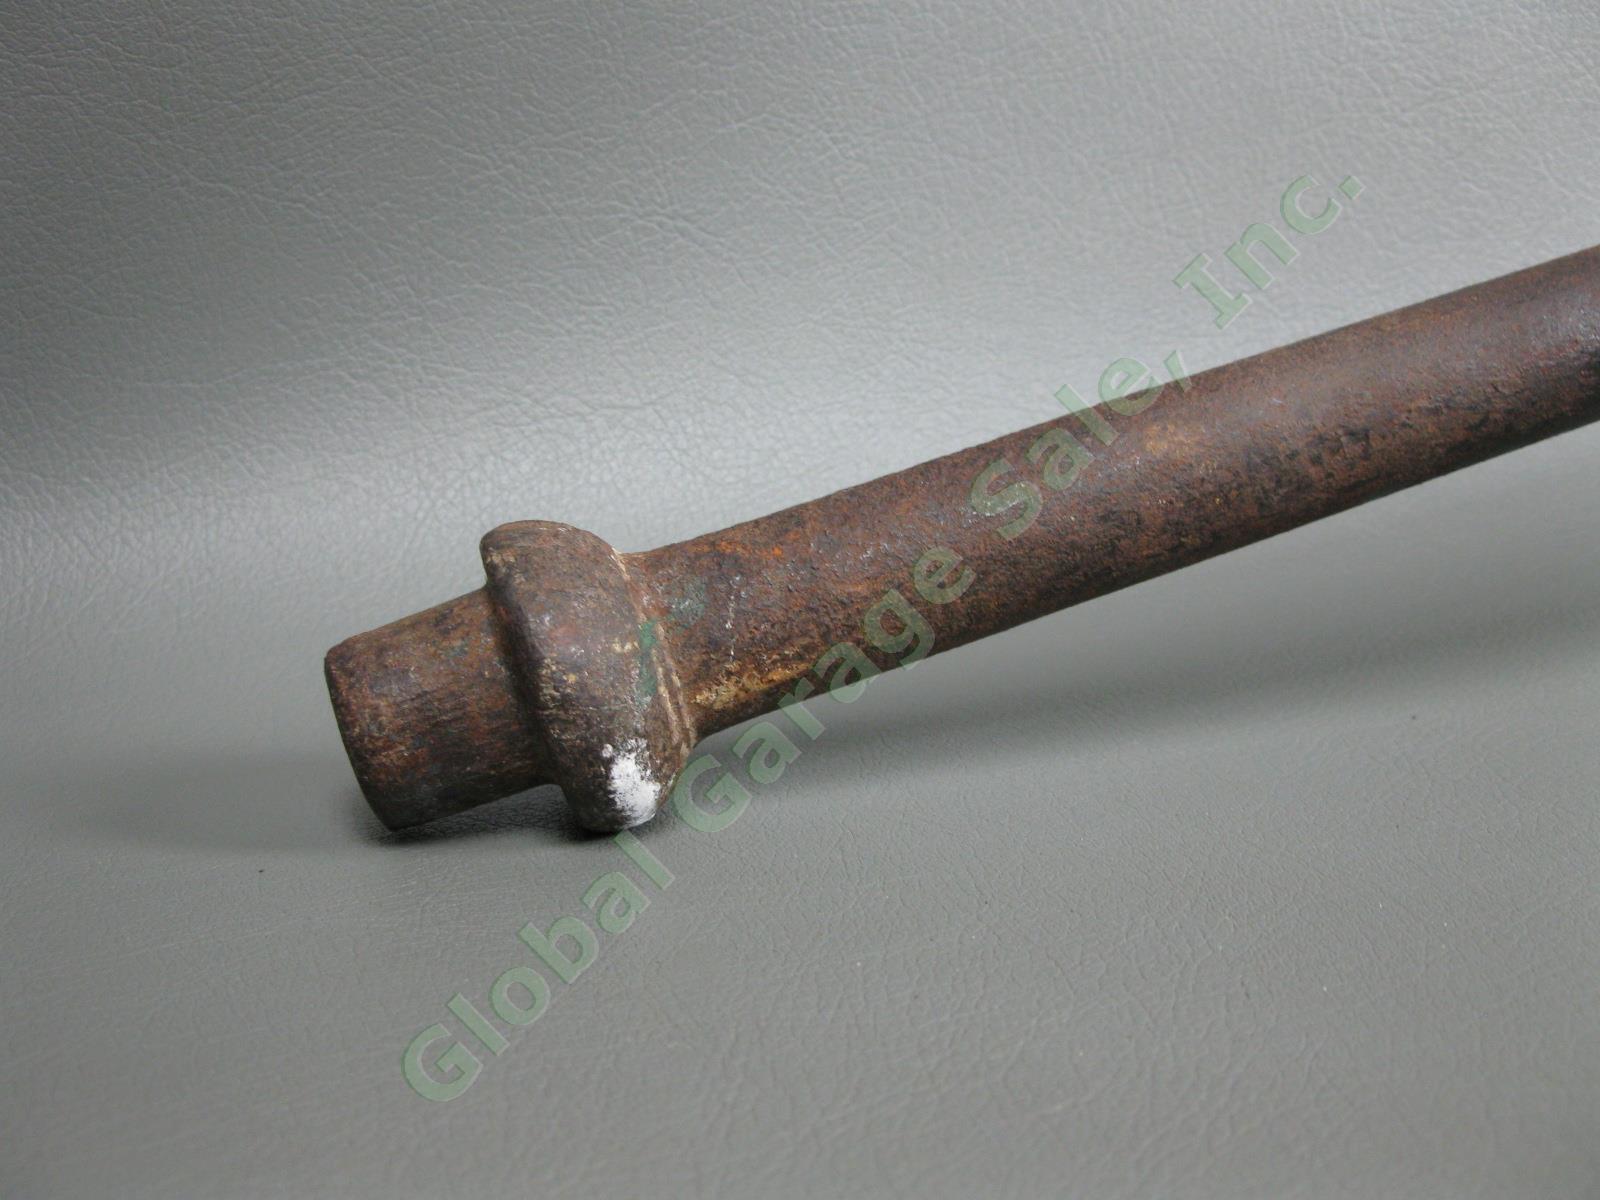 VTG Antique Blacksmith #2 Post Leg Vise 4 1/2" Jaw Clamp 53 lb Anvil Tool Forge 3